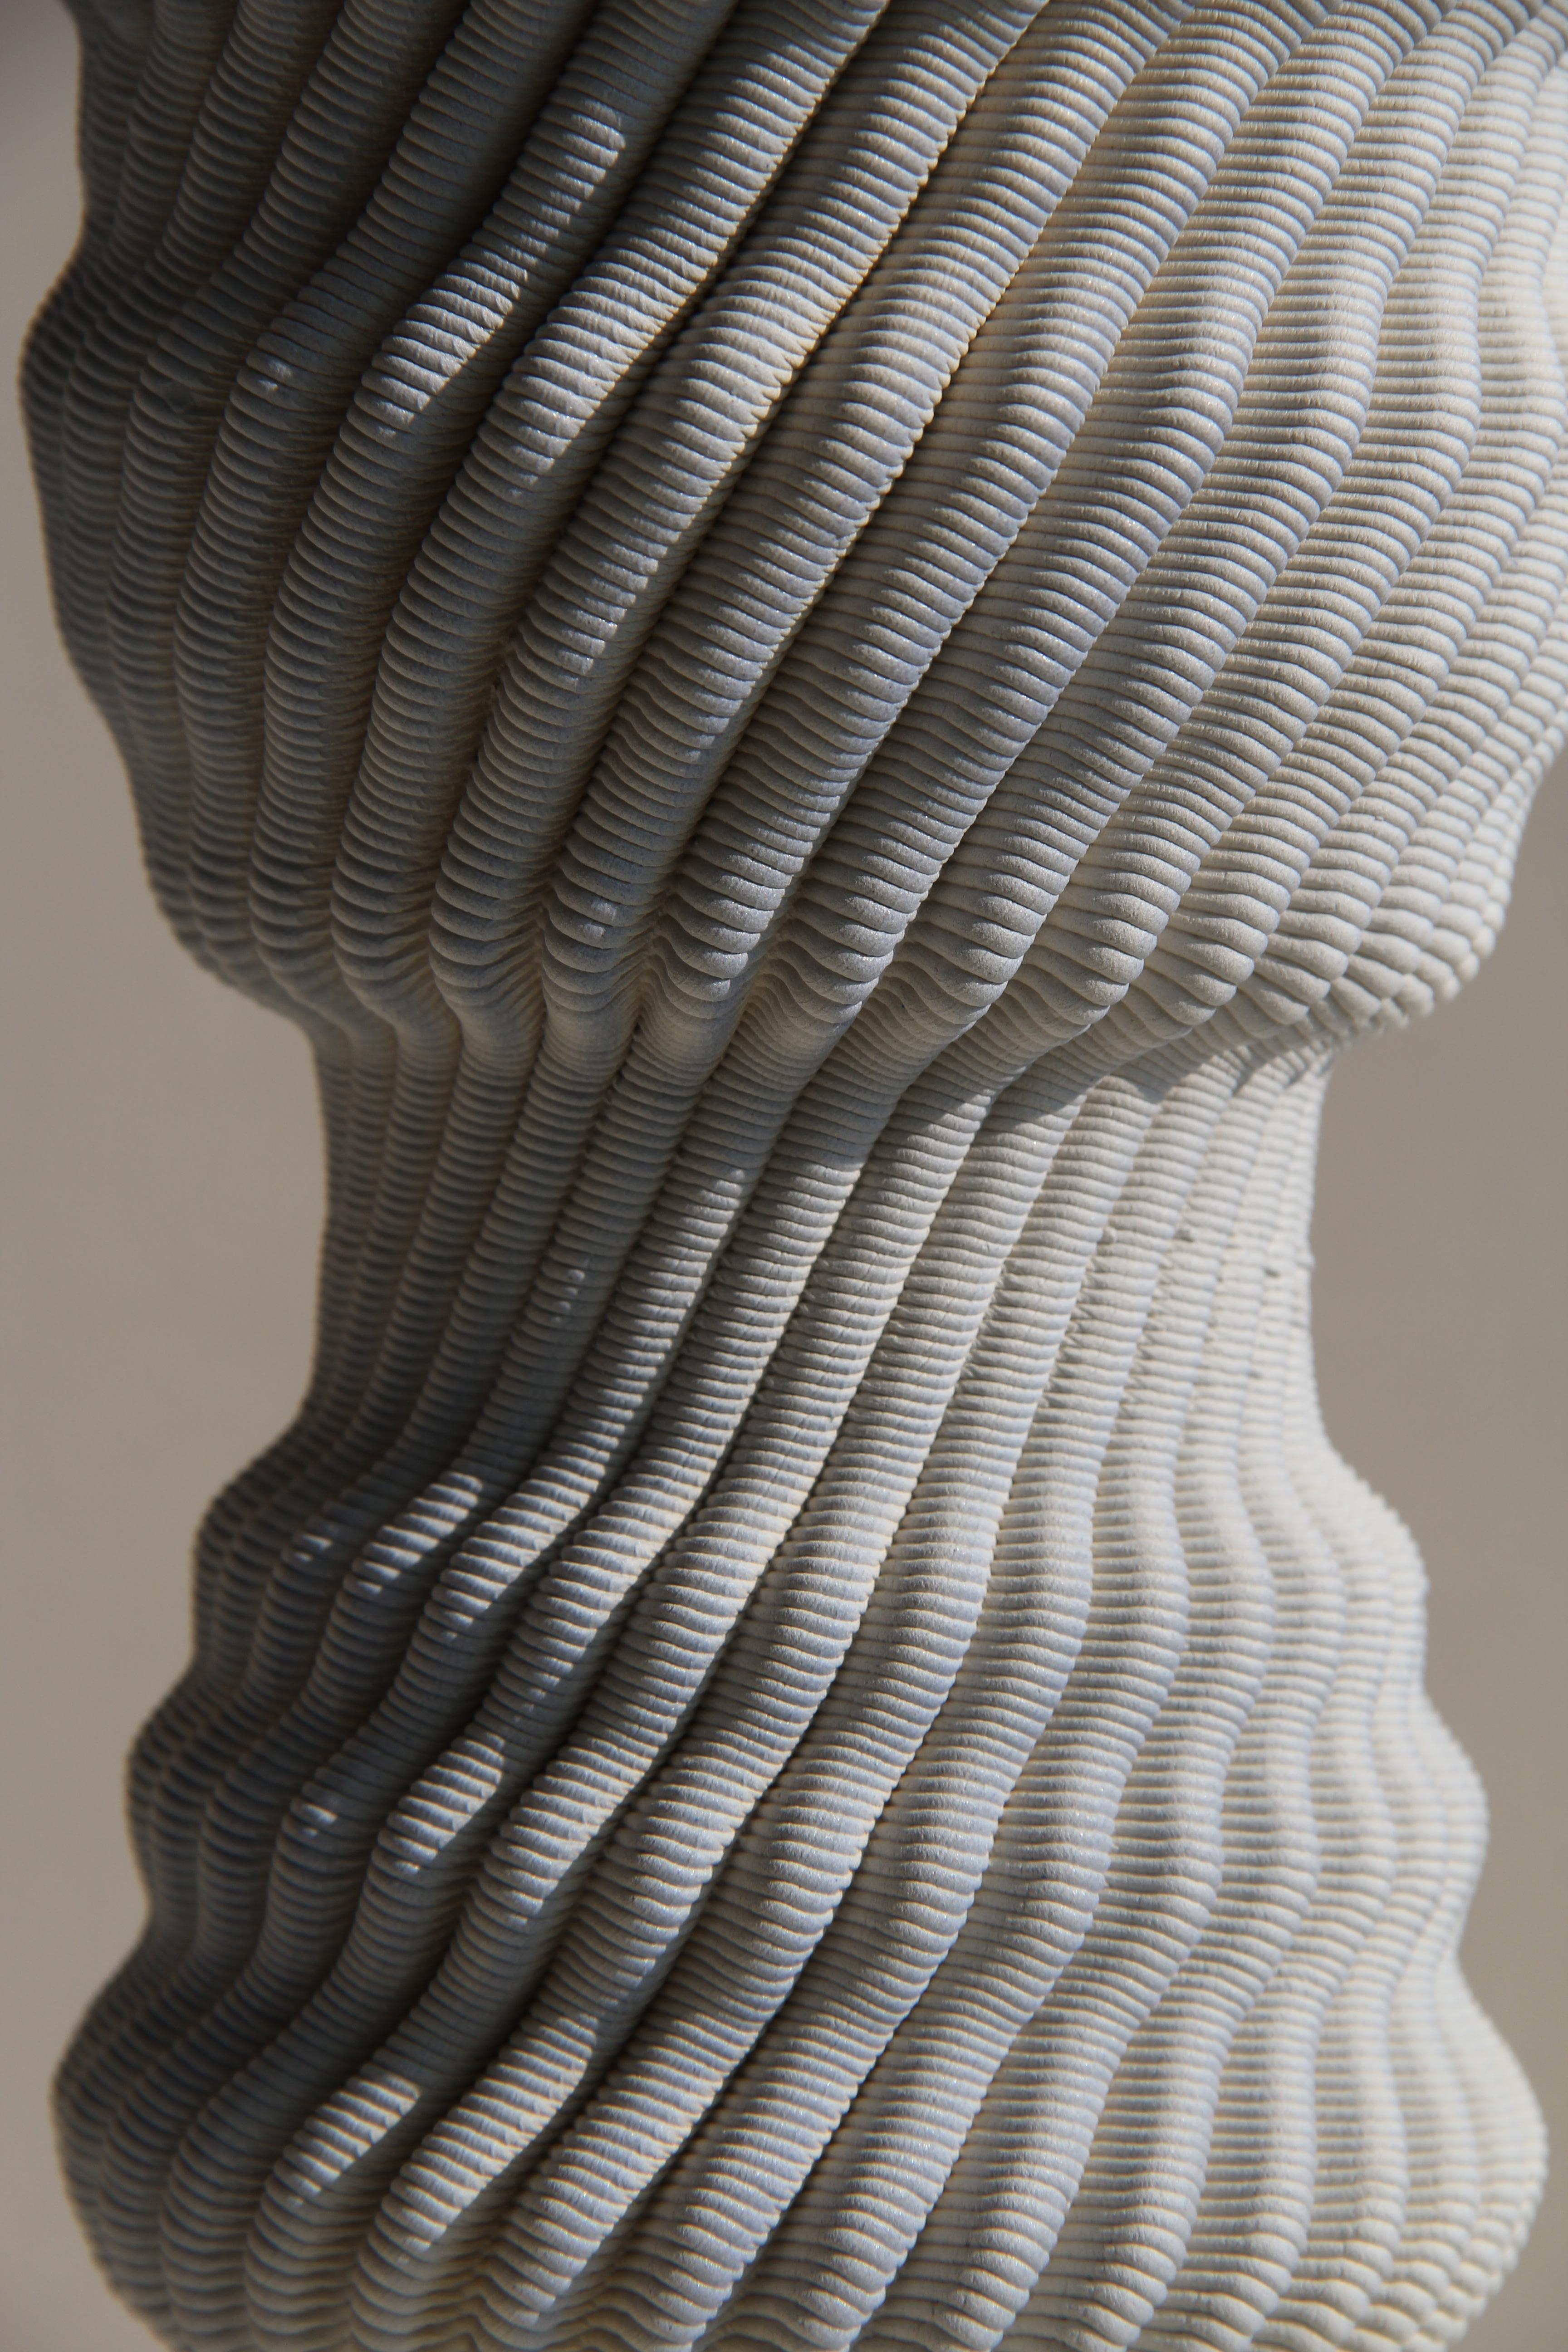 Gradient Blue 3D Printed Ceramic Tecla Vase Italy Contemporary 21st Century For Sale 3